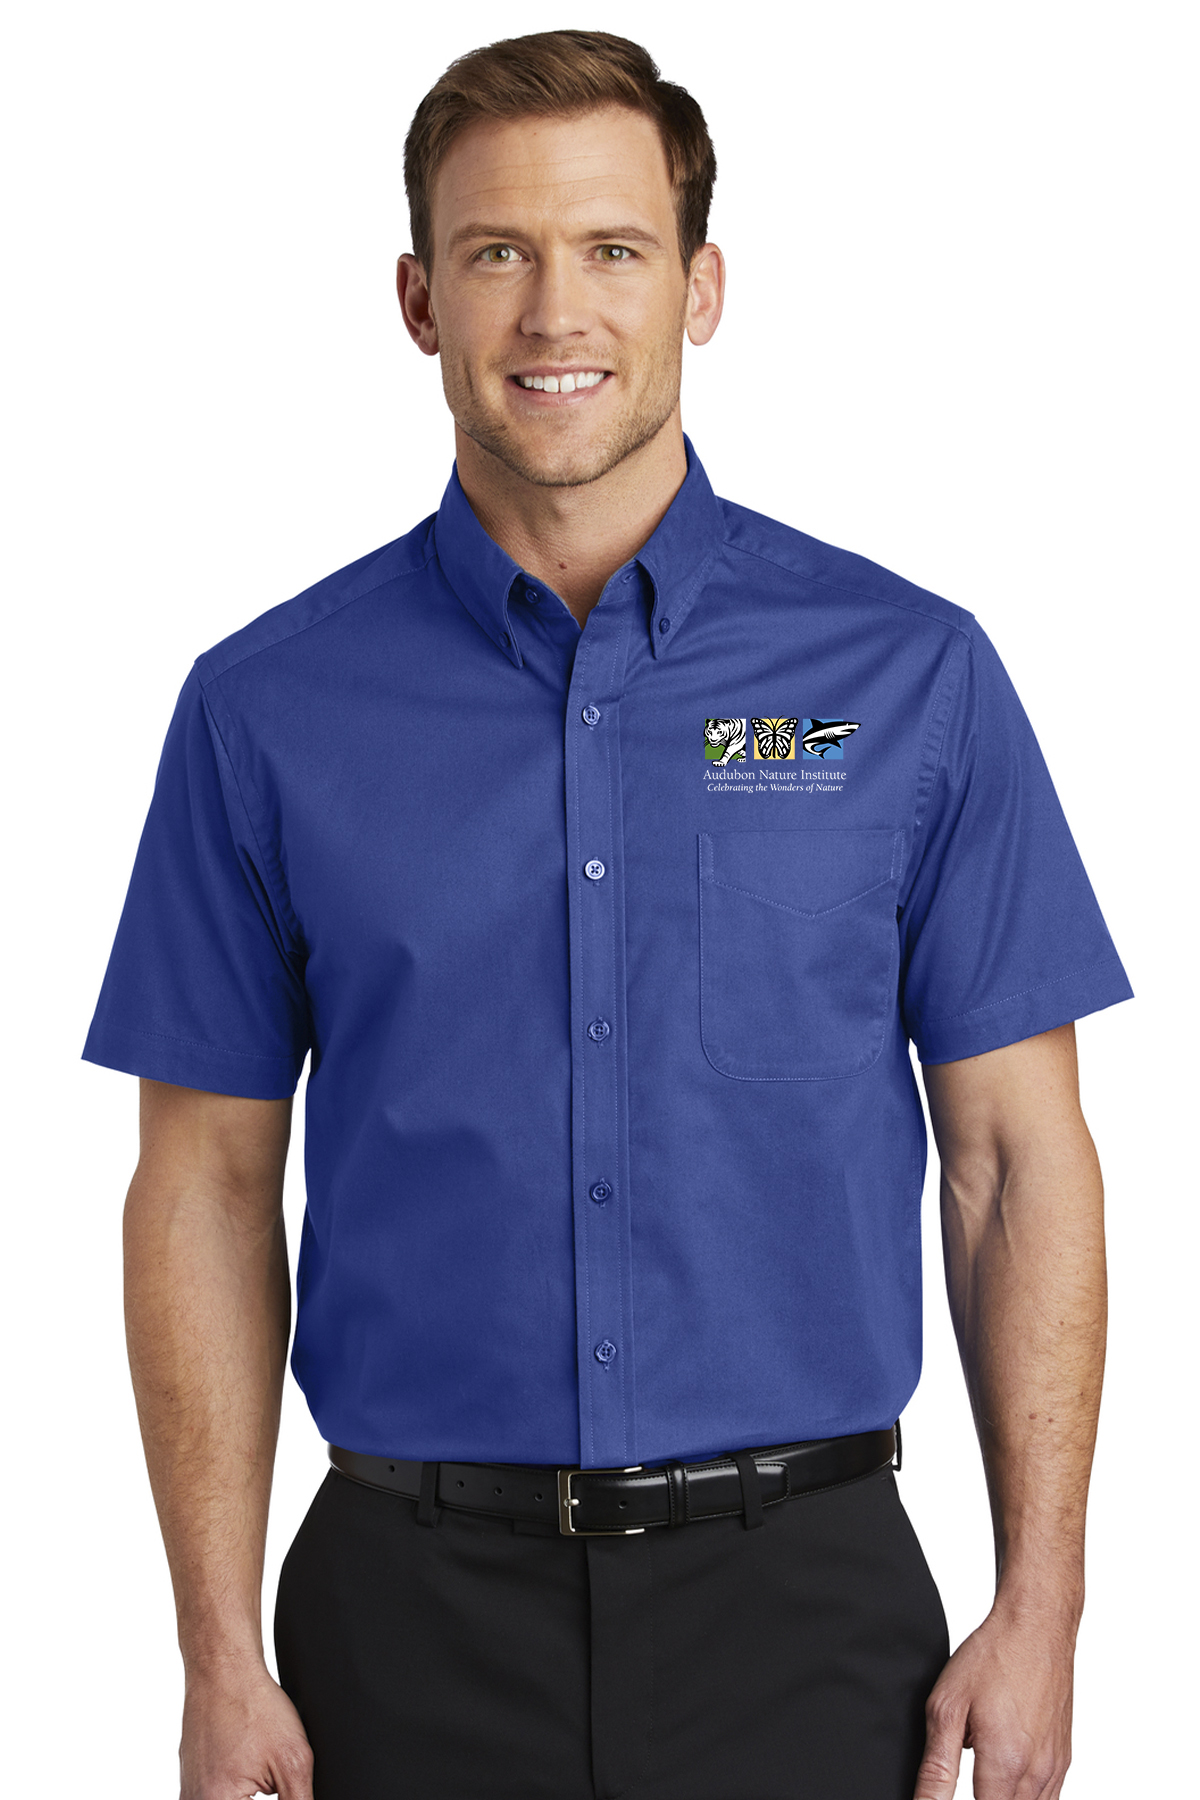 S508 Port Authority® Short Sleeve Easy Care Shirt - Audubon